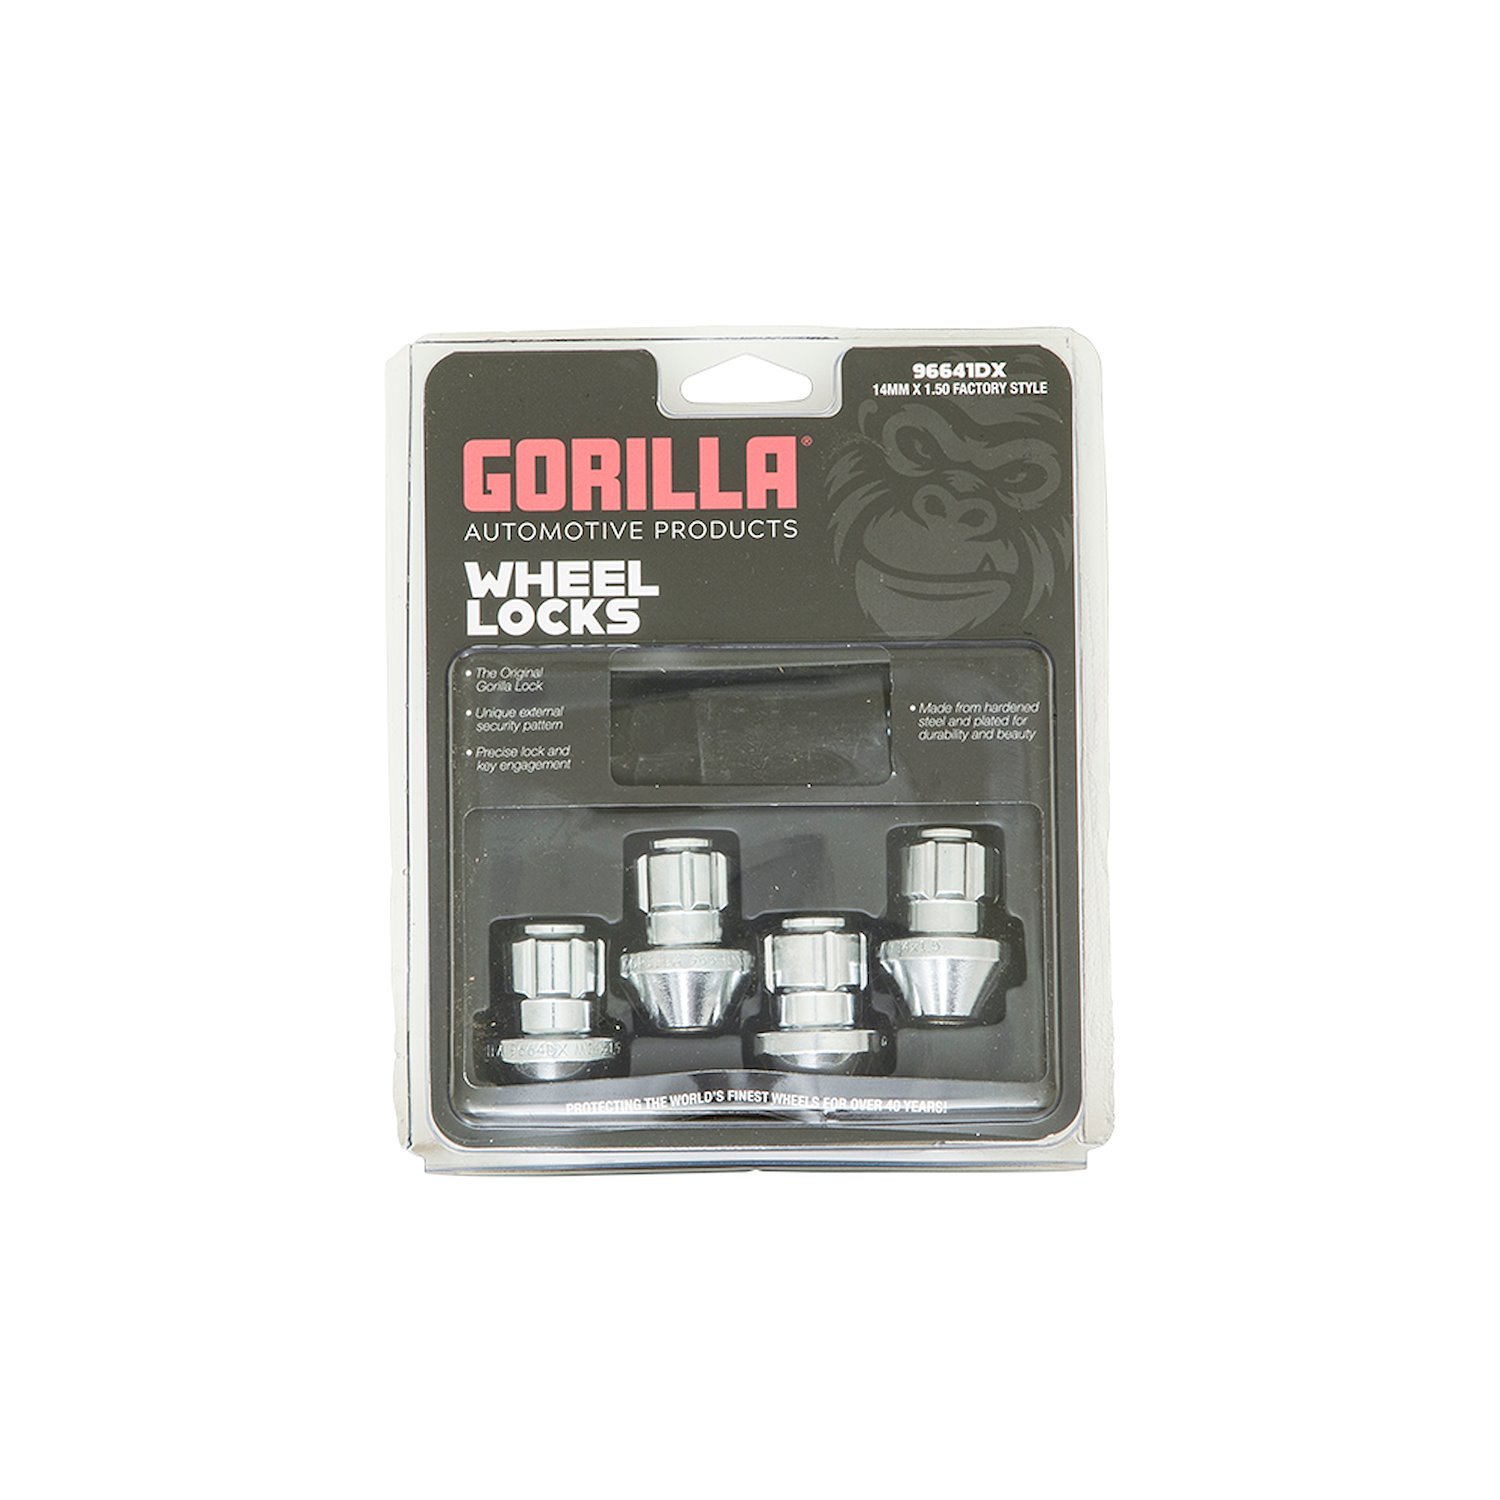 96641DX Gorilla Lock Factory-Style Wheel Locks, 14 mm x 1.50, Chrome